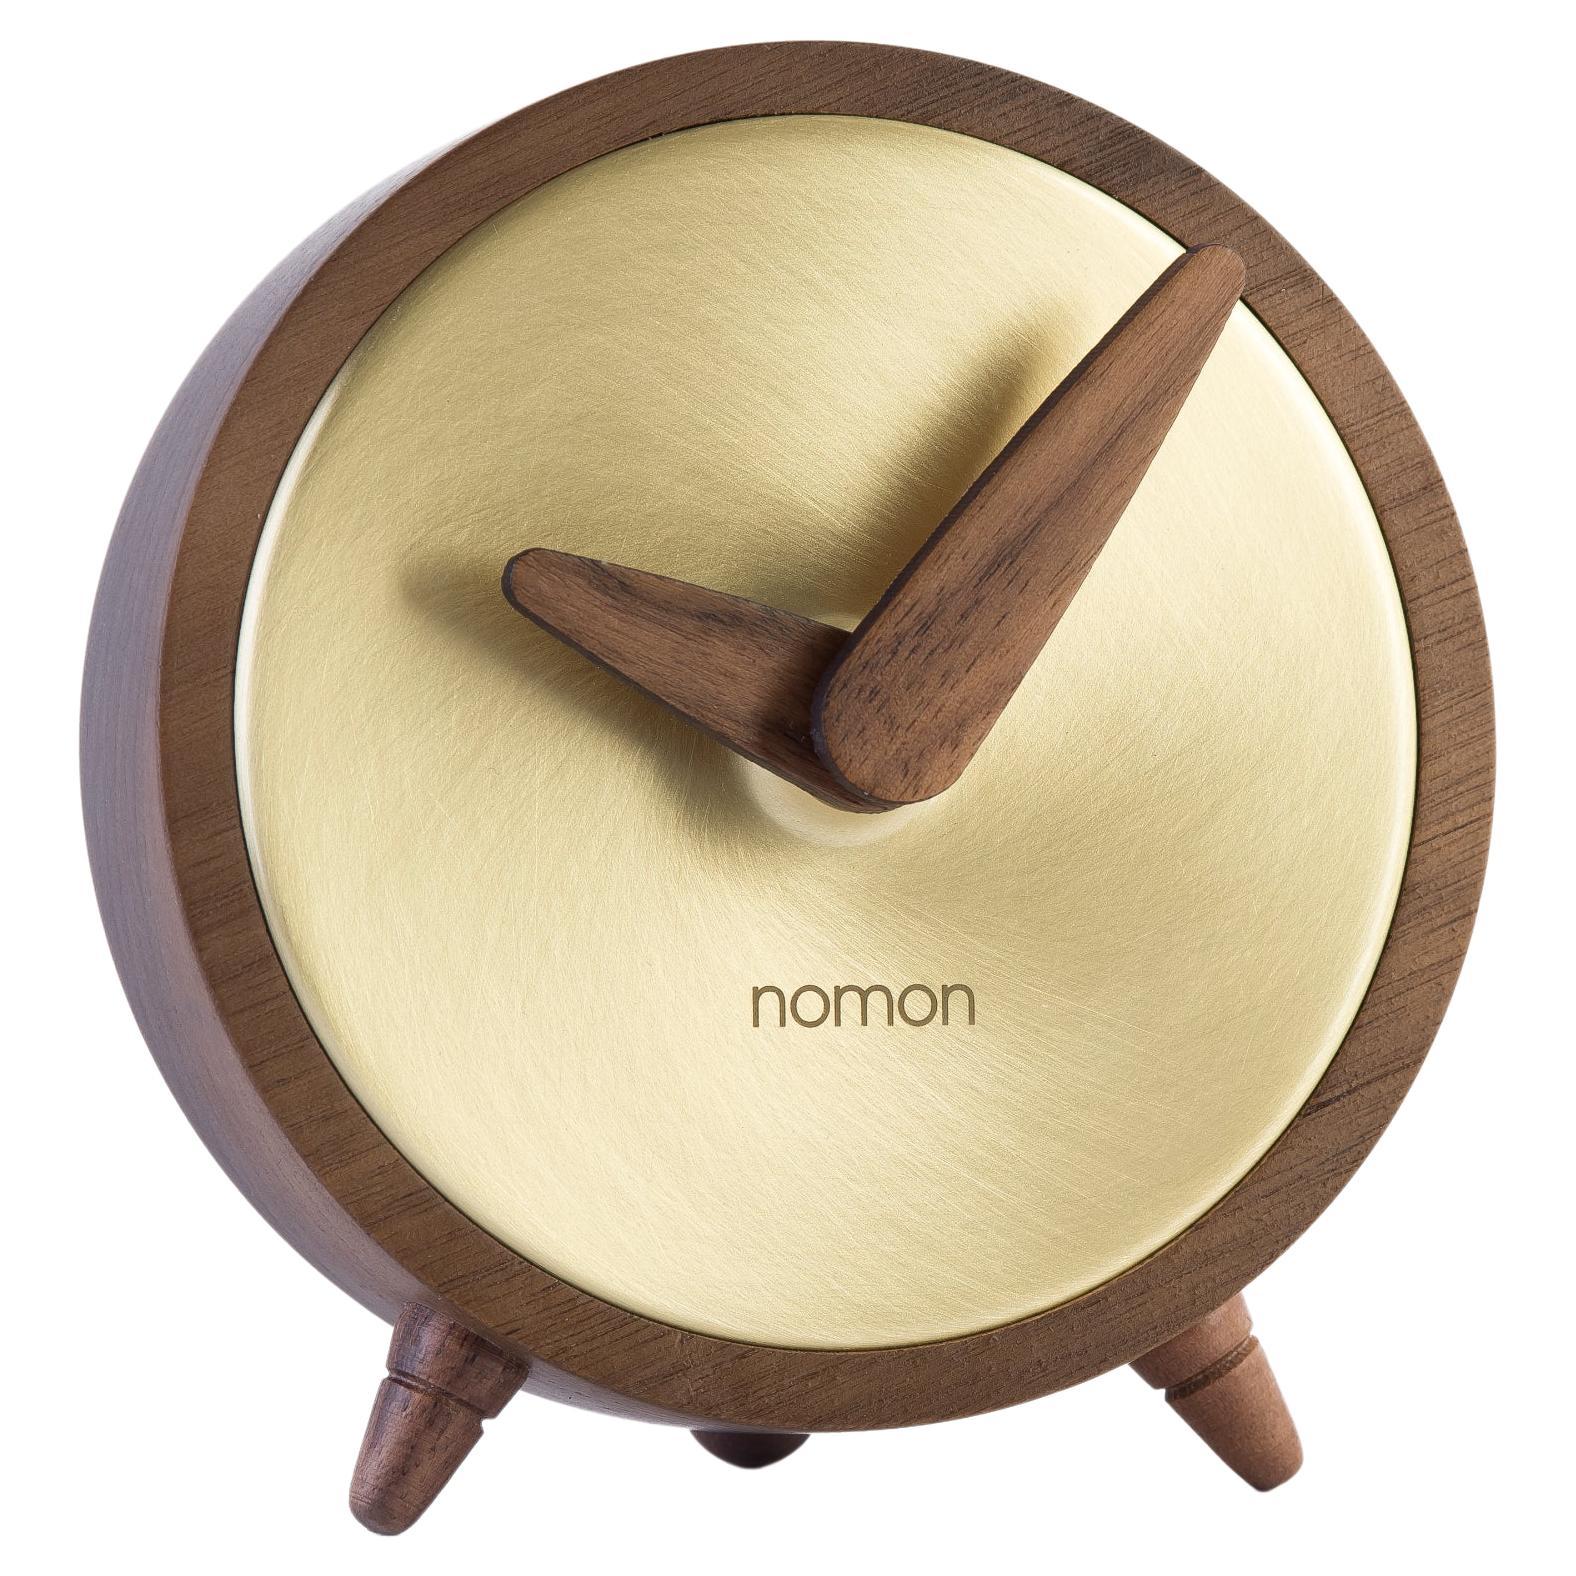 Nomon Atomo Tischuhr von Andres Martinez